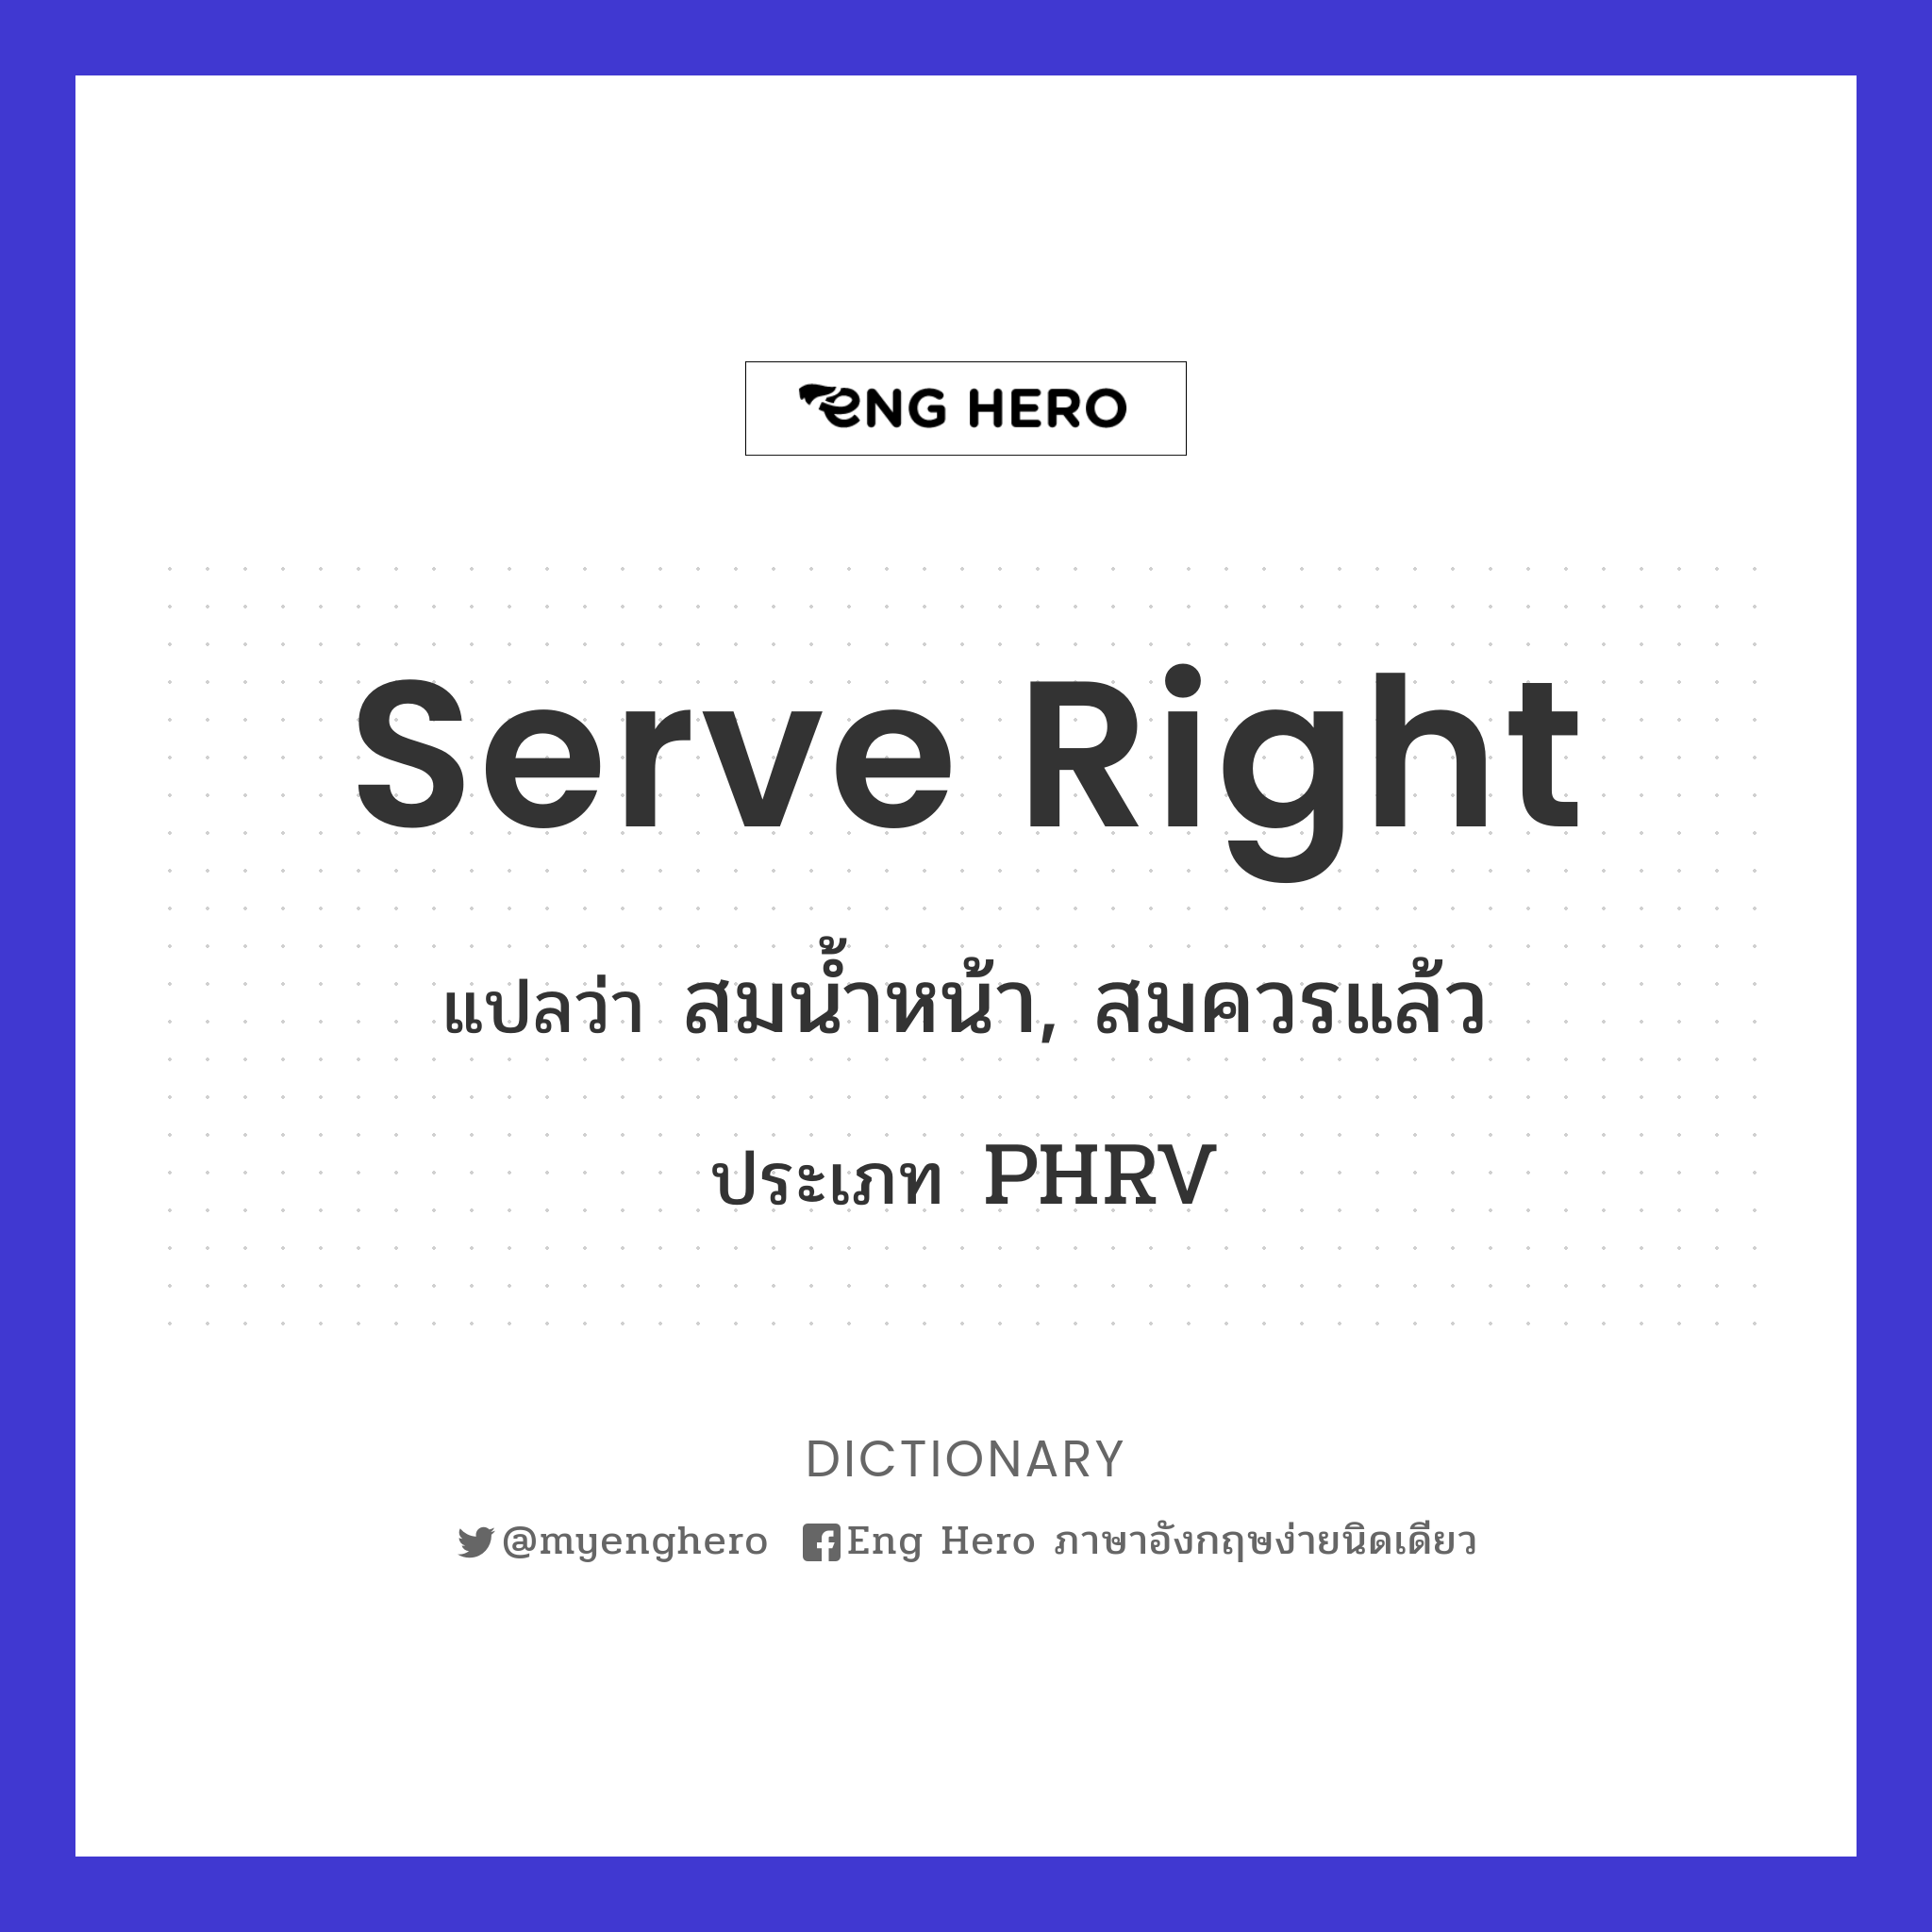 Serve Right แปลว่า สมน้ำหน้า, สมควรแล้ว | Eng Hero เรียนภาษาอังกฤษ ออนไลน์  ฟรี